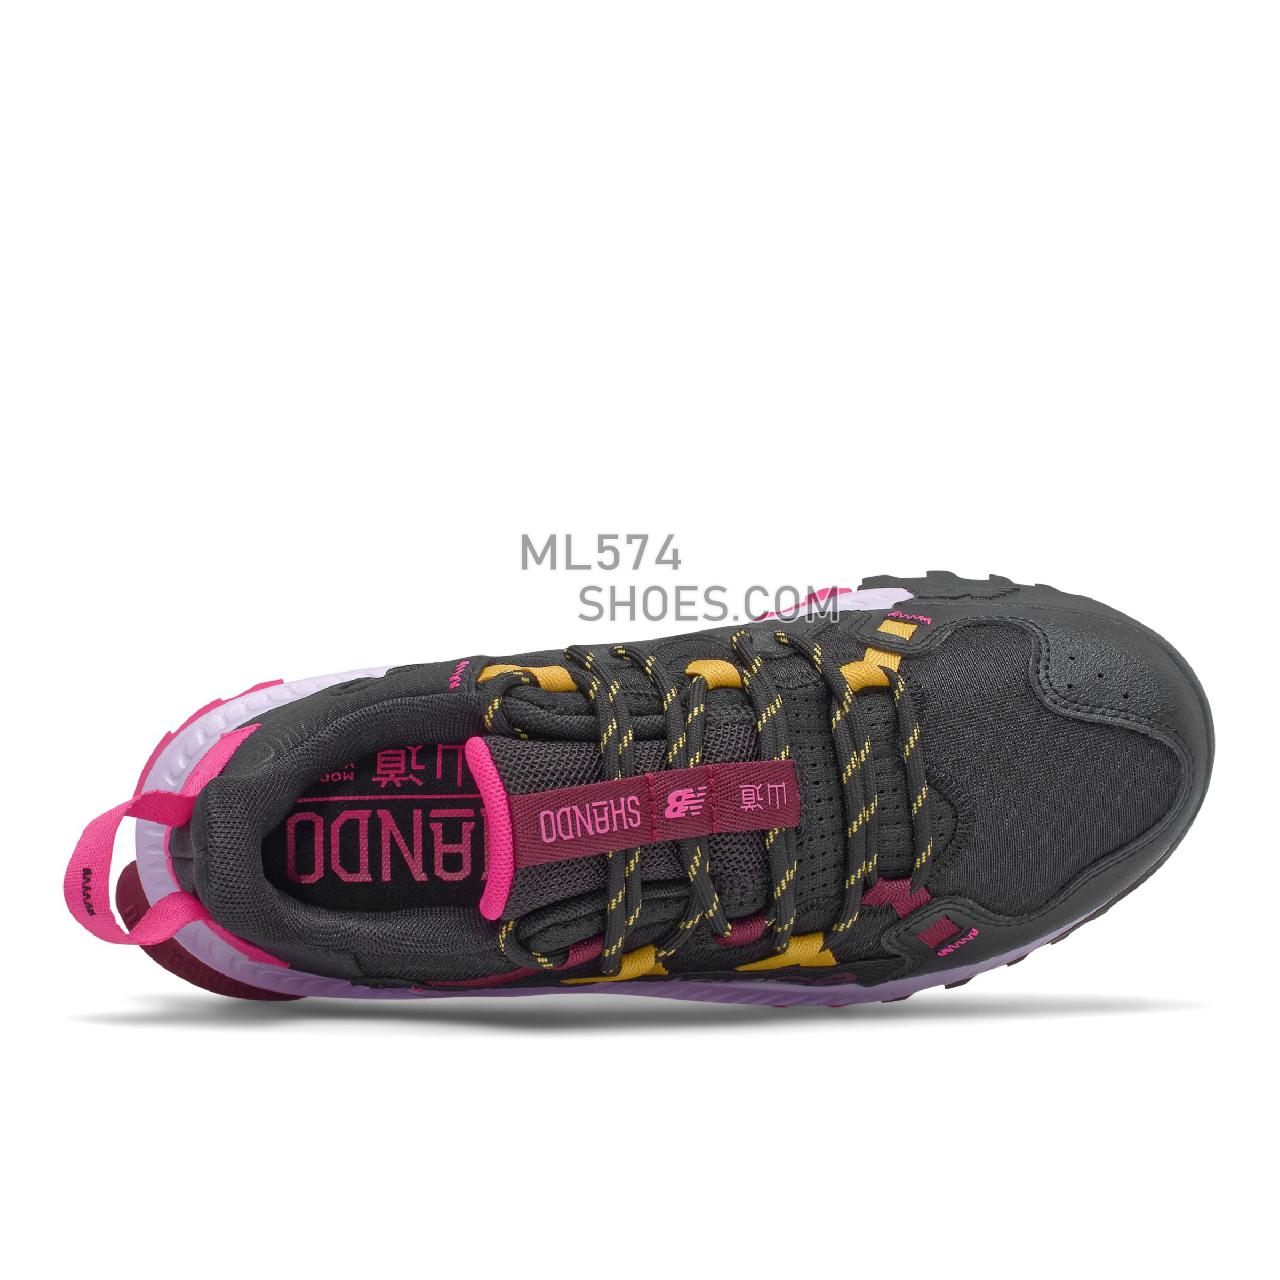 New Balance Shando - Women's Trail Running - Black with Pink - WTSHACB1